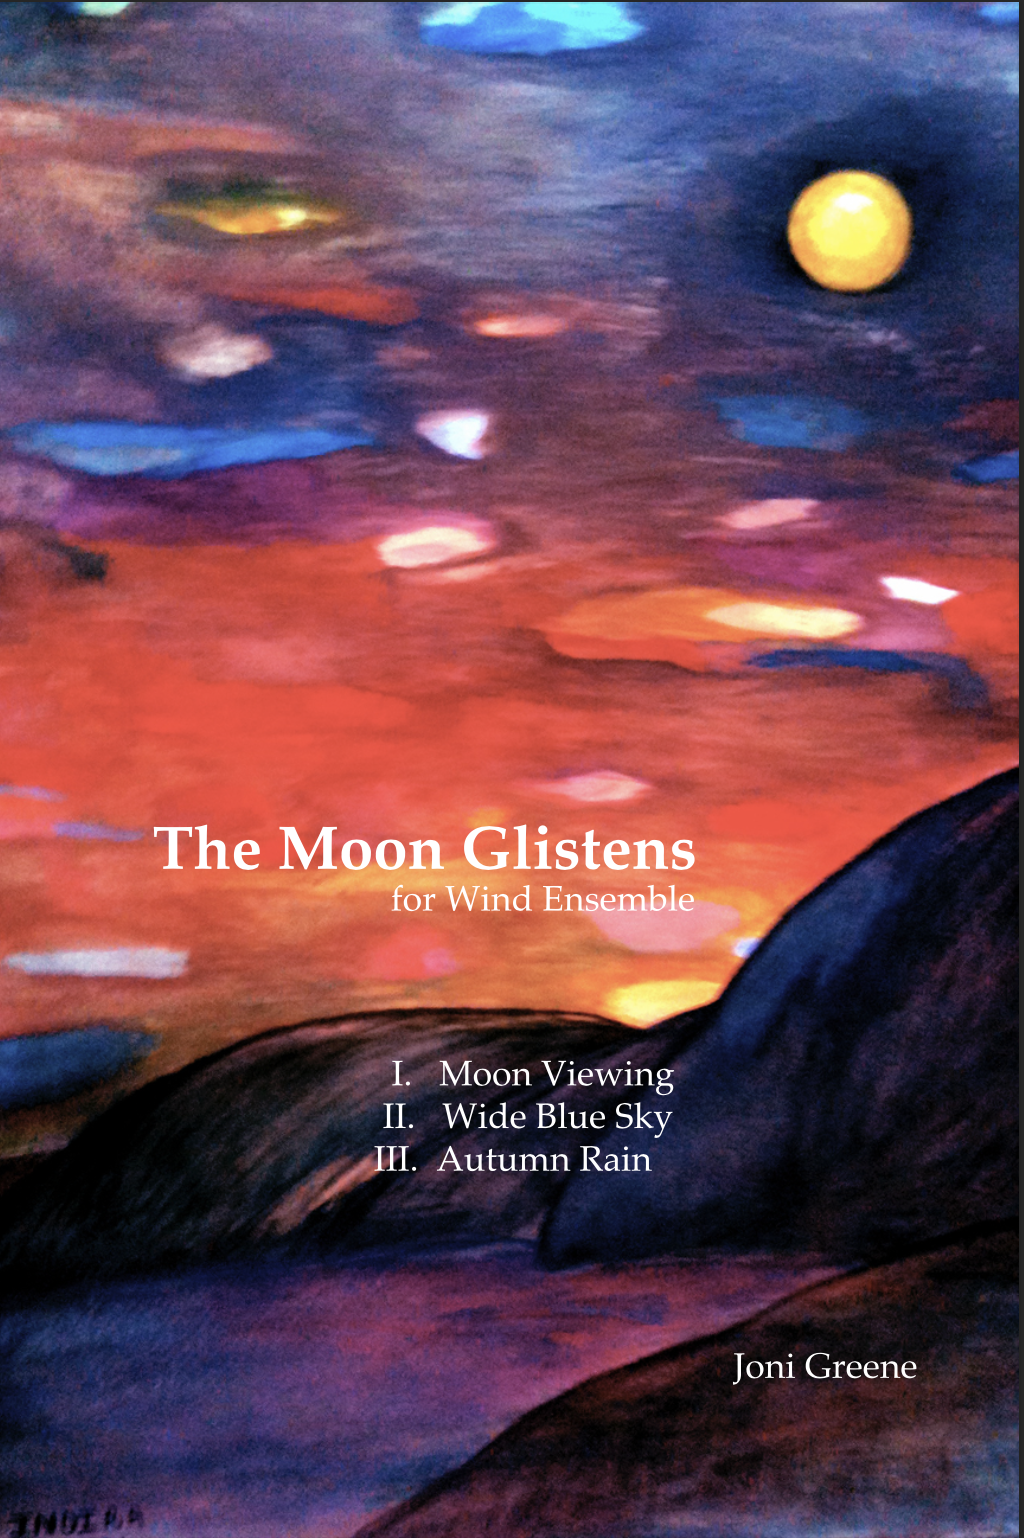 The Moon Glistens (Score Only) by Joni Greene